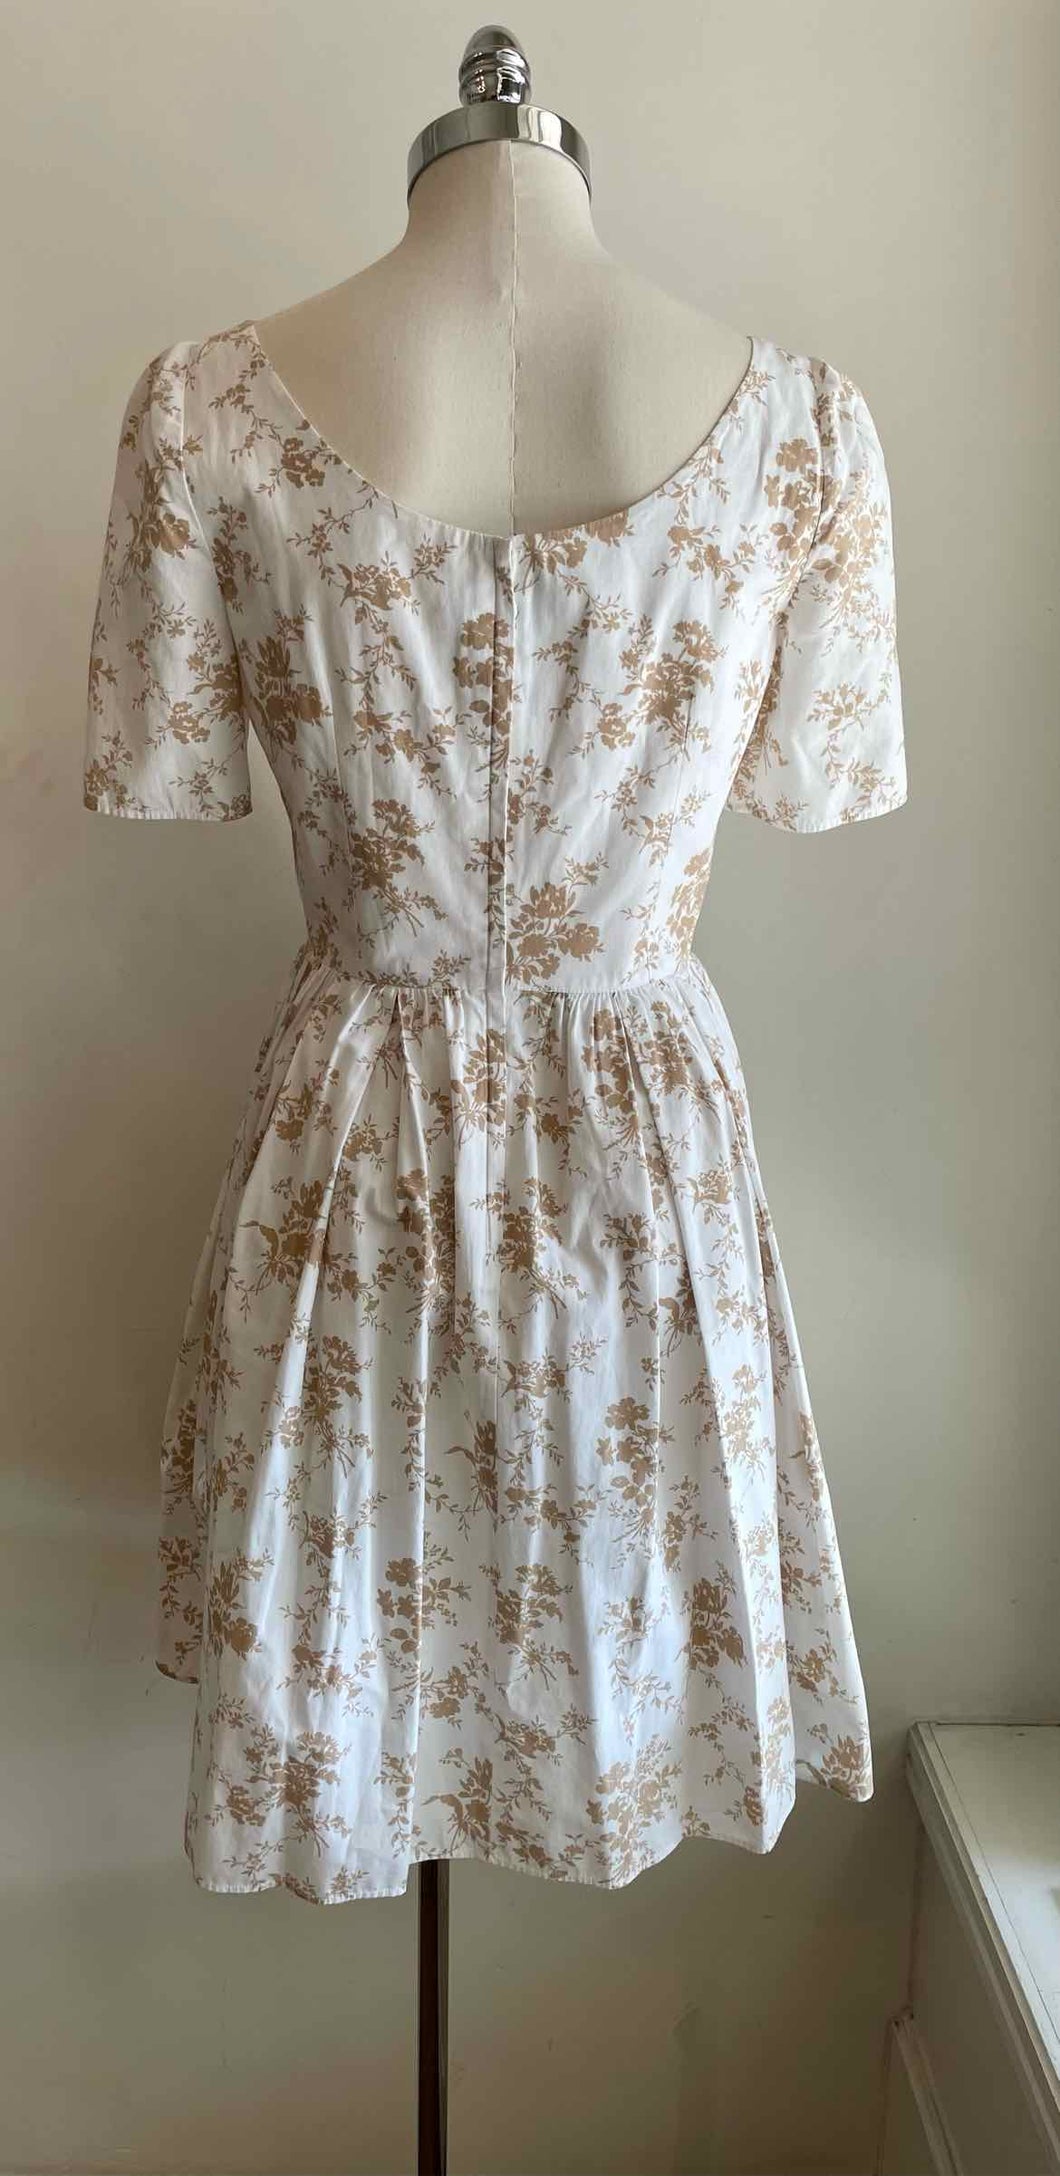 DOLCE & GABBANA Size 4 White & Beige Cotton Floral Dress